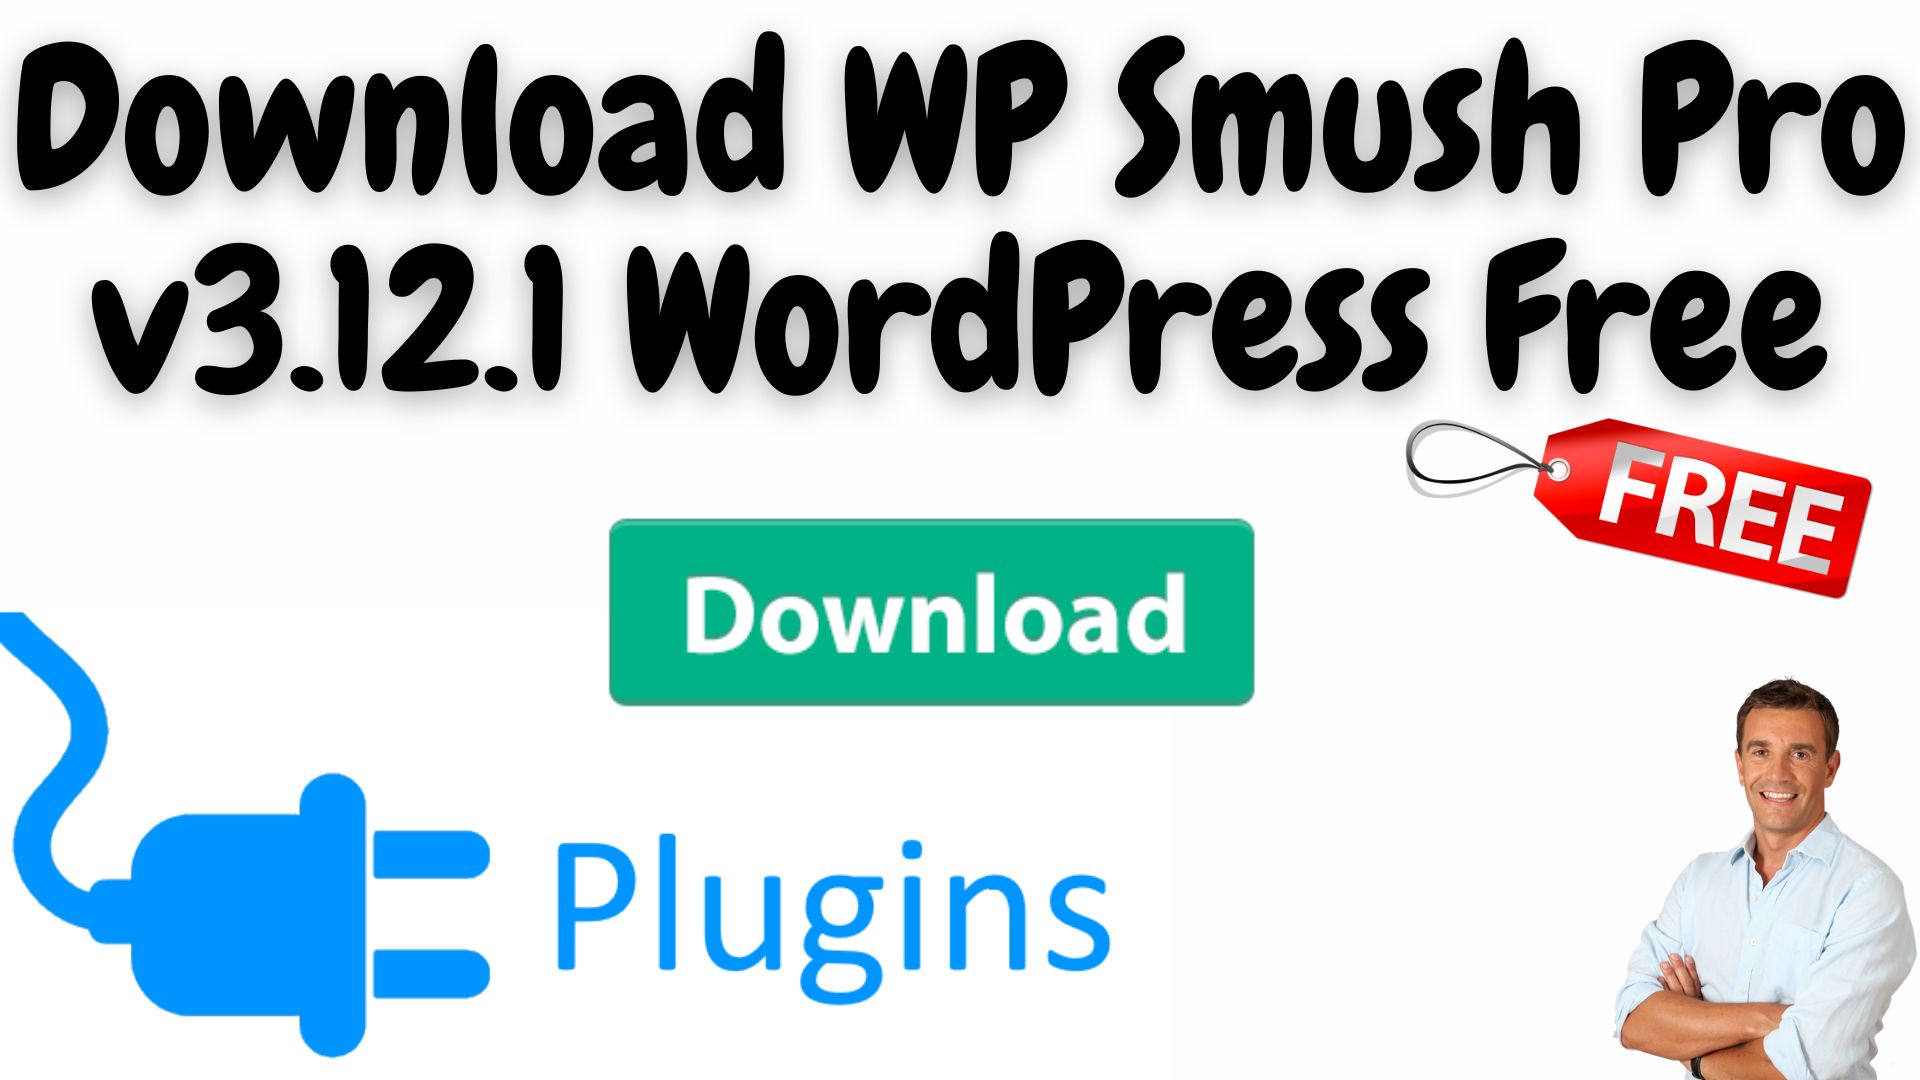 Download wp smush pro v3. 12. 1 wordpress free